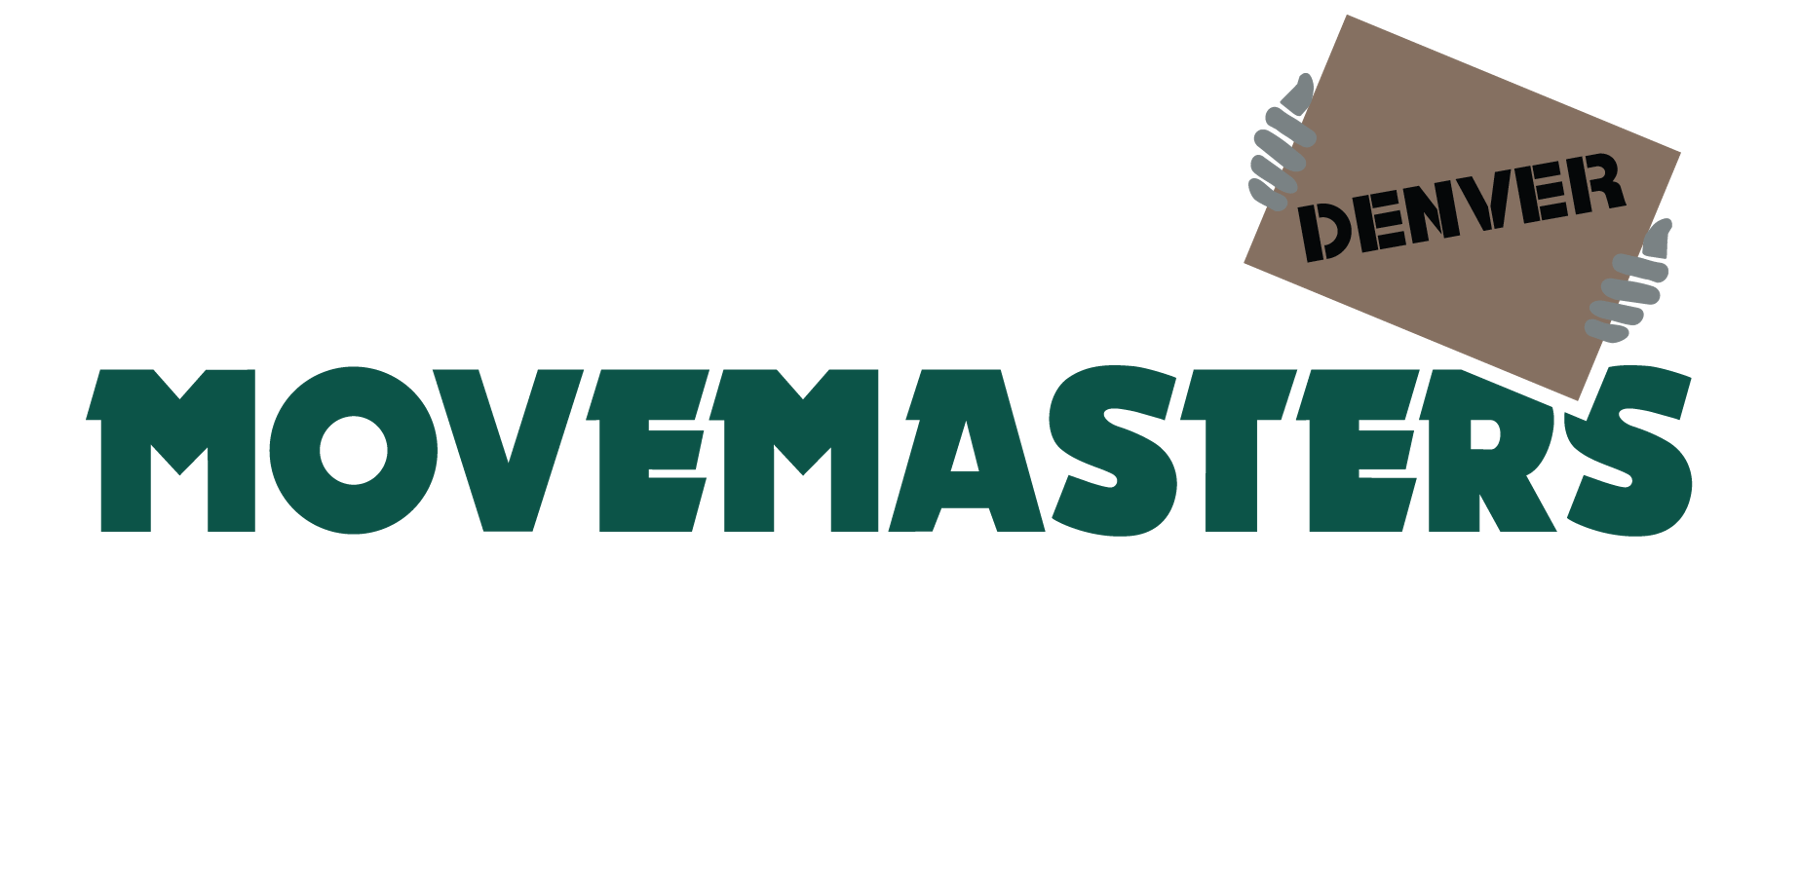 Movemasters_logo-web-fullcolor